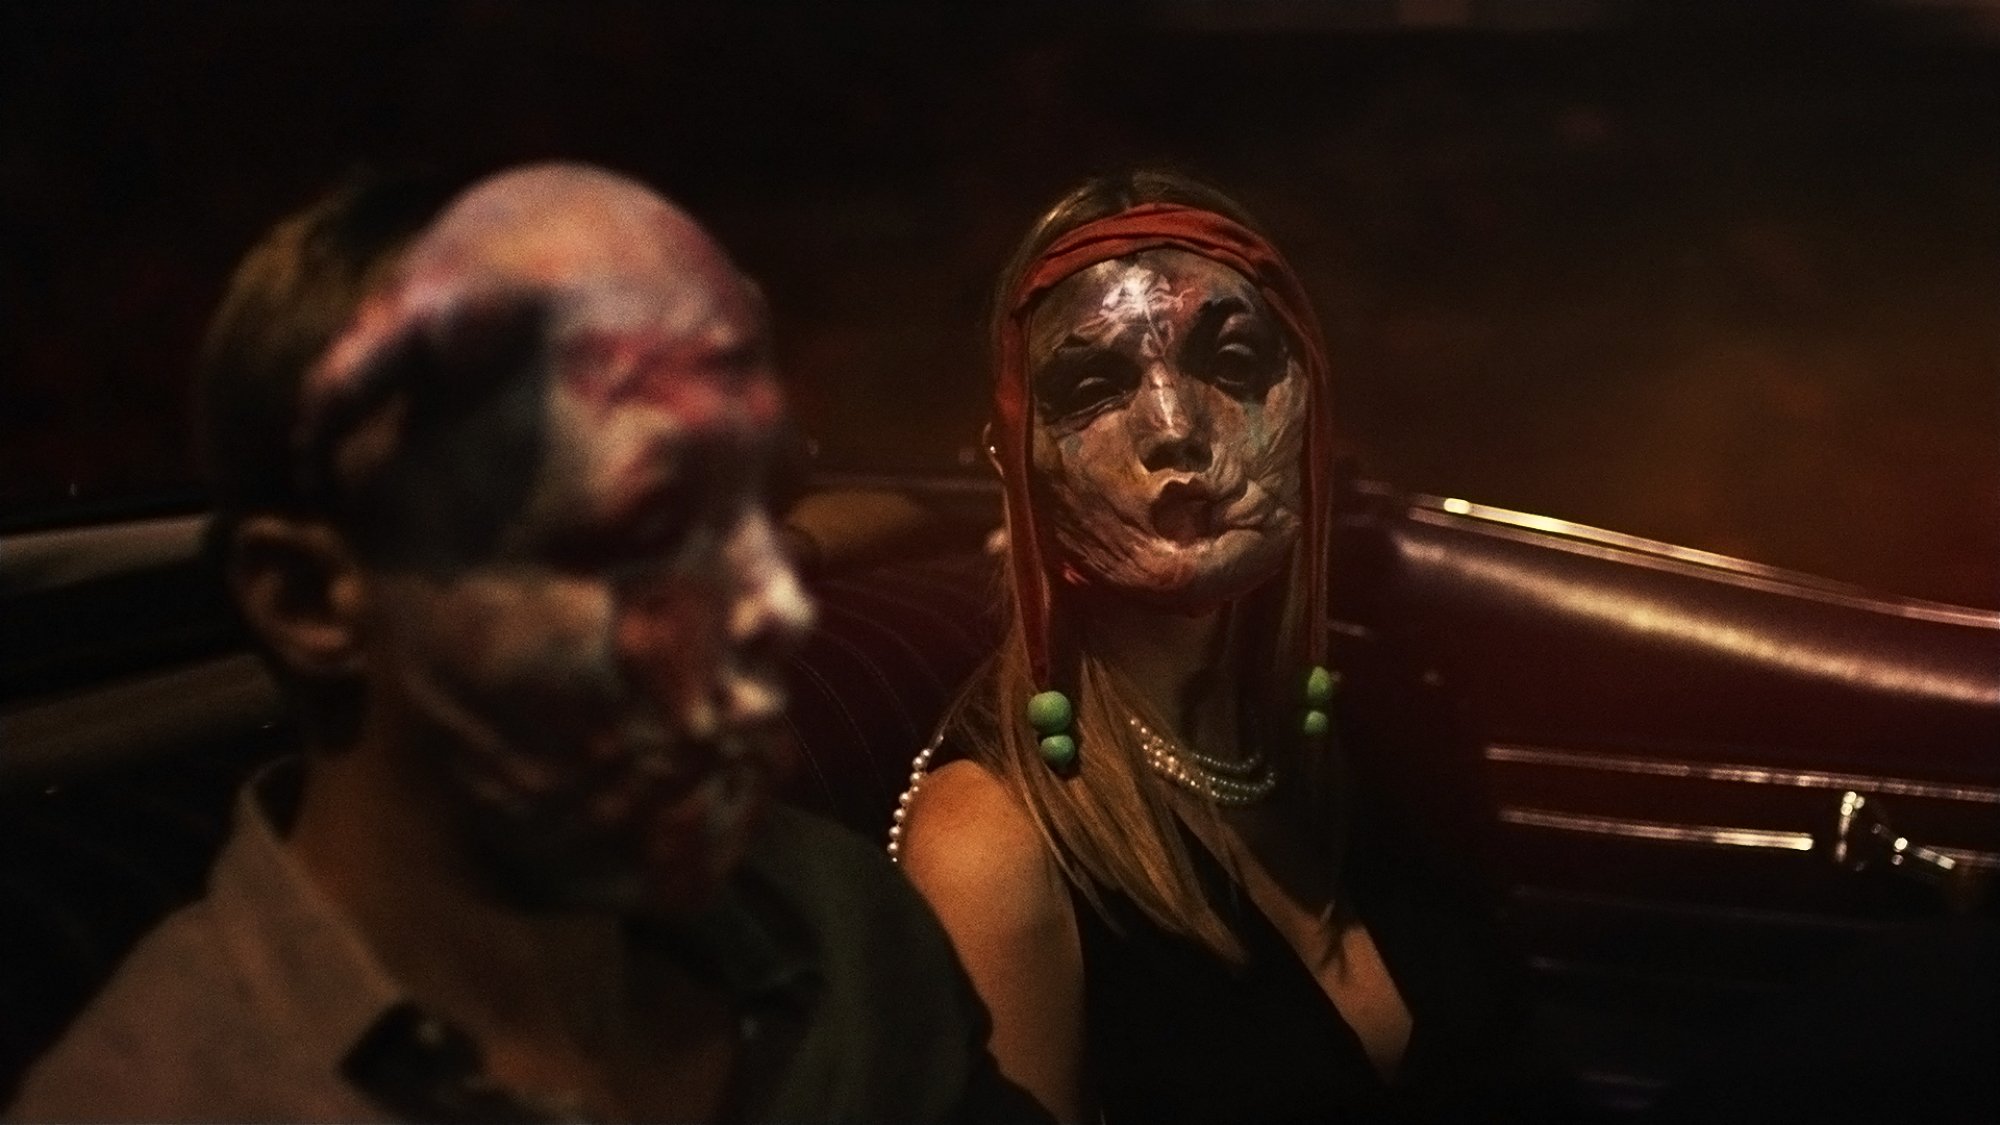 'Infinity Pool' Alexander Skarsgård as James Foster and Mia Goth as Gabi sitting in a car wearing Ekki masks.